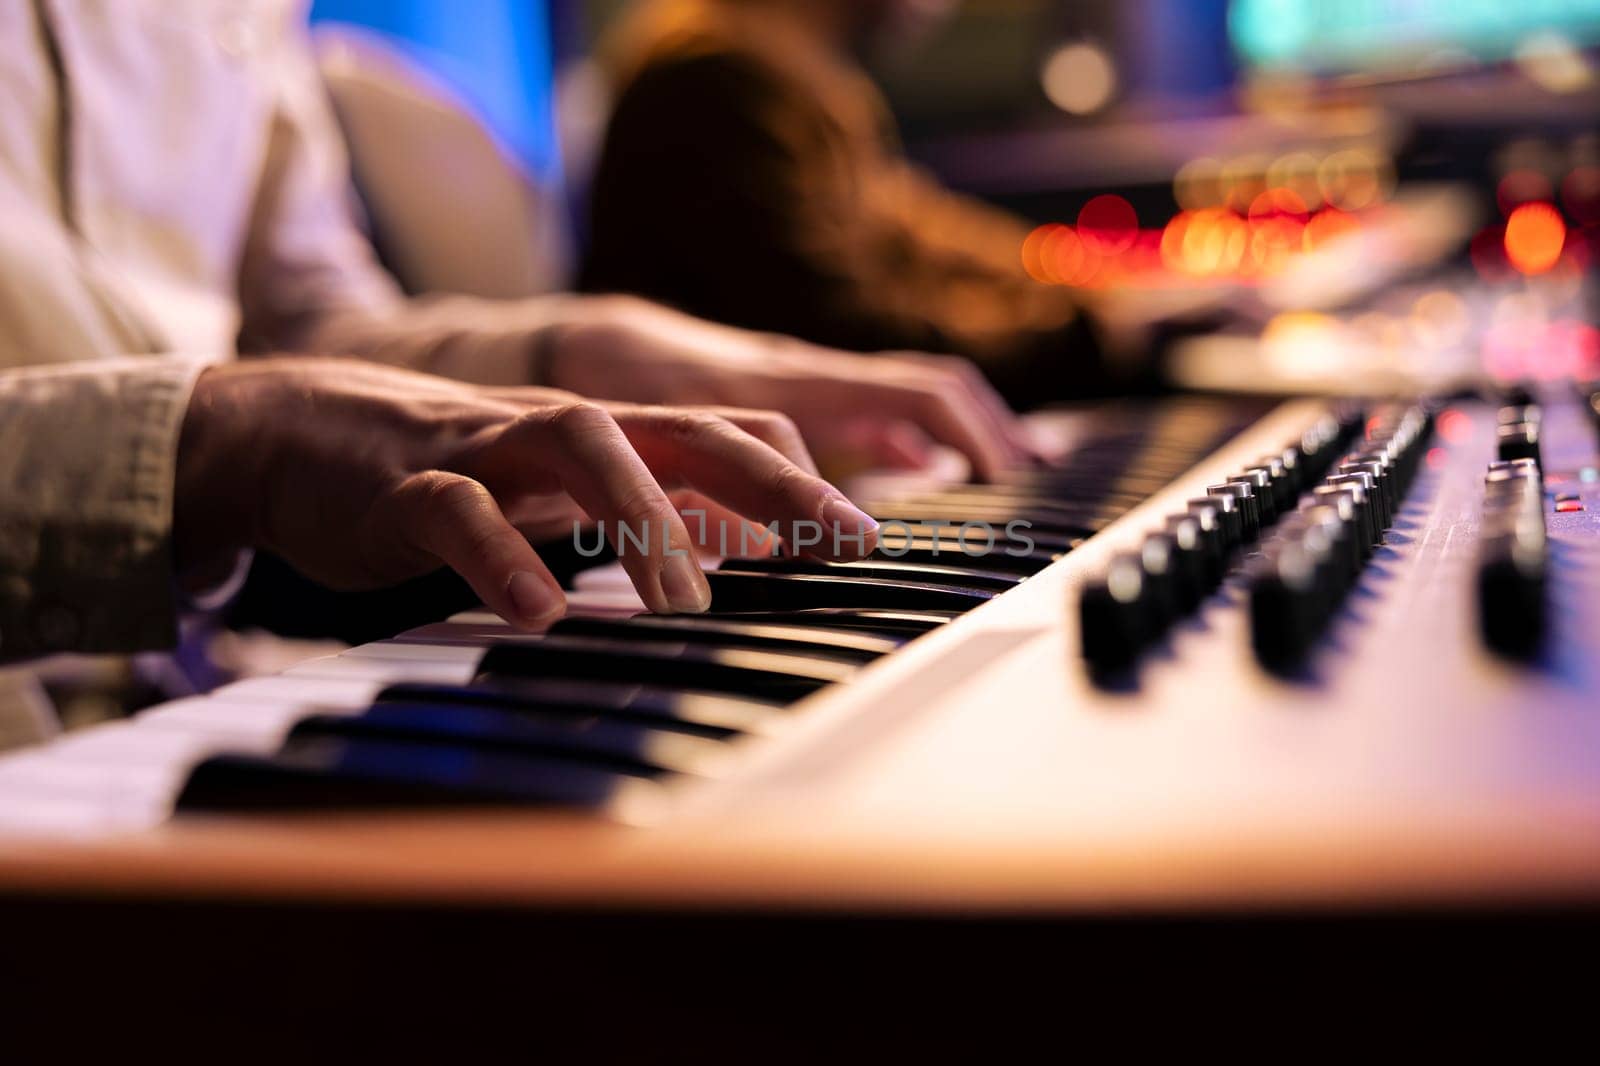 Singer songwriter creating new tracks on midi controller in studio by DCStudio